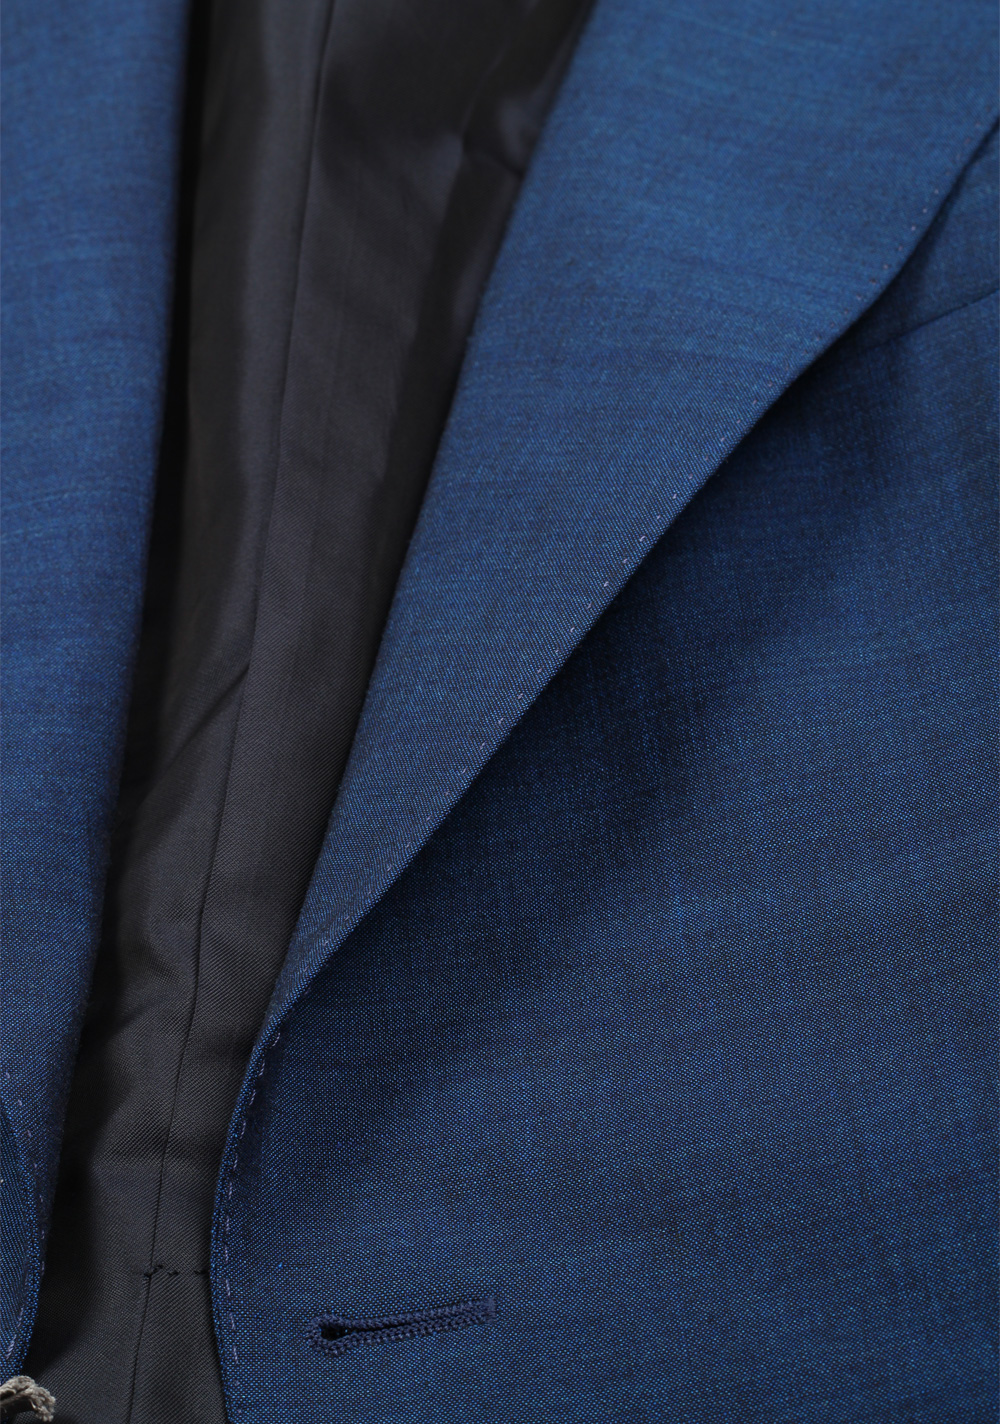 TOM FORD Windsor Solid Blue Suit | Costume Limité